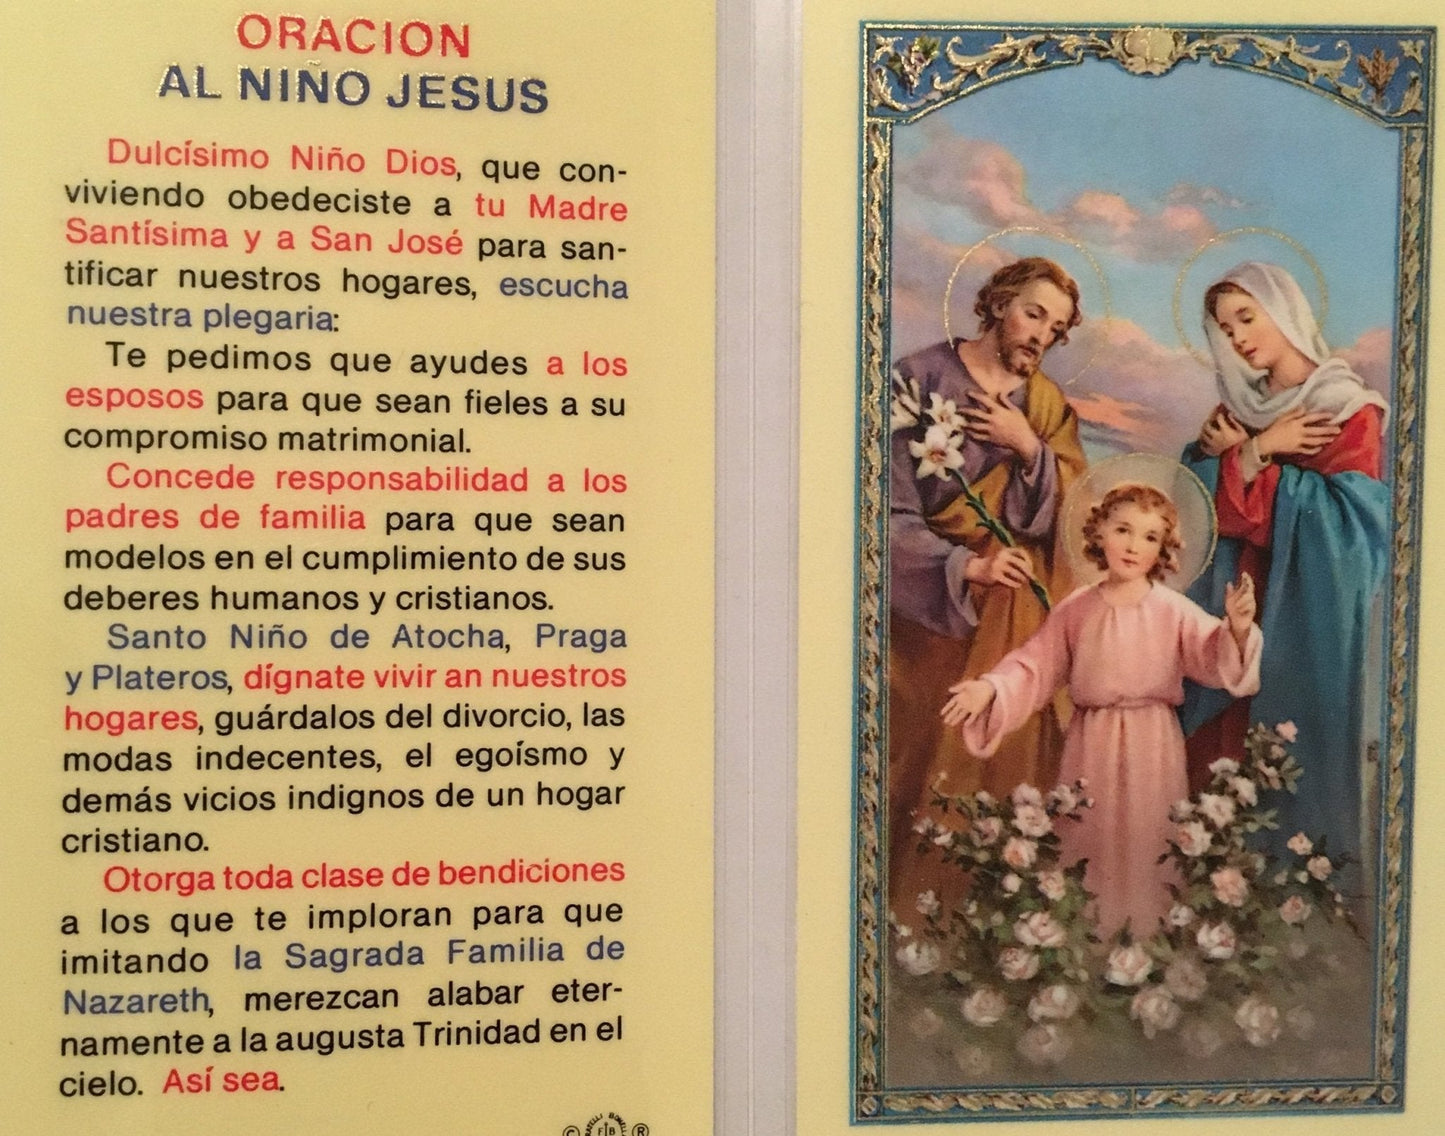 Prayer Card Oracion Al Nino Jesus Laminated 700-236 - Ysleta Mission Gift Shop- VOTED El Paso's Best Gift Shop